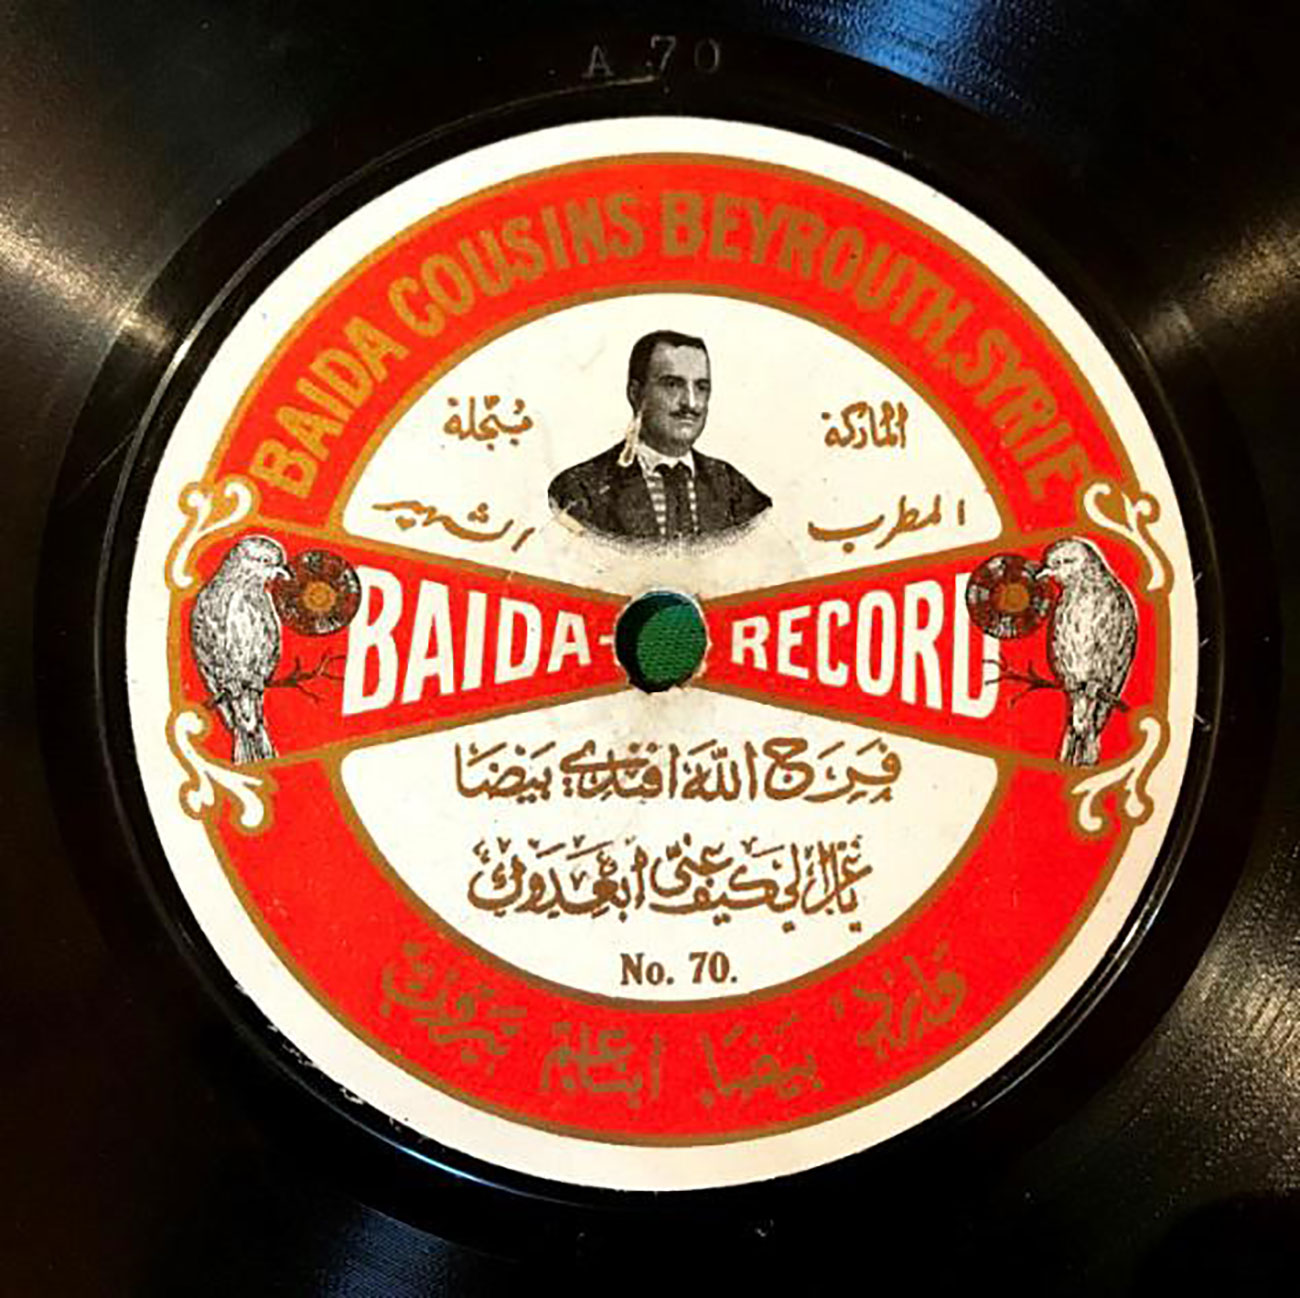 Farajallah Baida (Liban). Ya Ghazali Kayfa Anni Ab’aduk / Ma gazelle comment t’ont-ils éloigné de moi. 1907, Baidaphon, 78 tours. AMAR – Fondation for Arab Music Archiving & Research, Beyrouth © AMAR